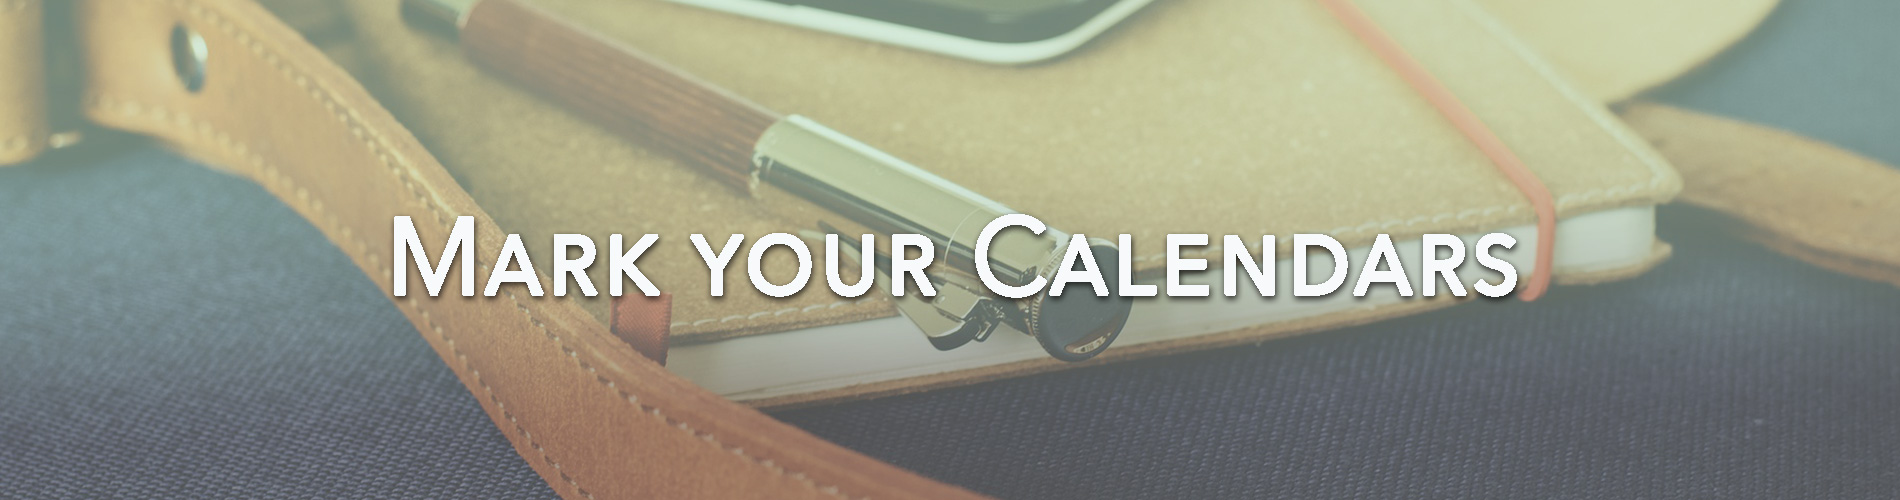 Charity Activities Mark your calendars